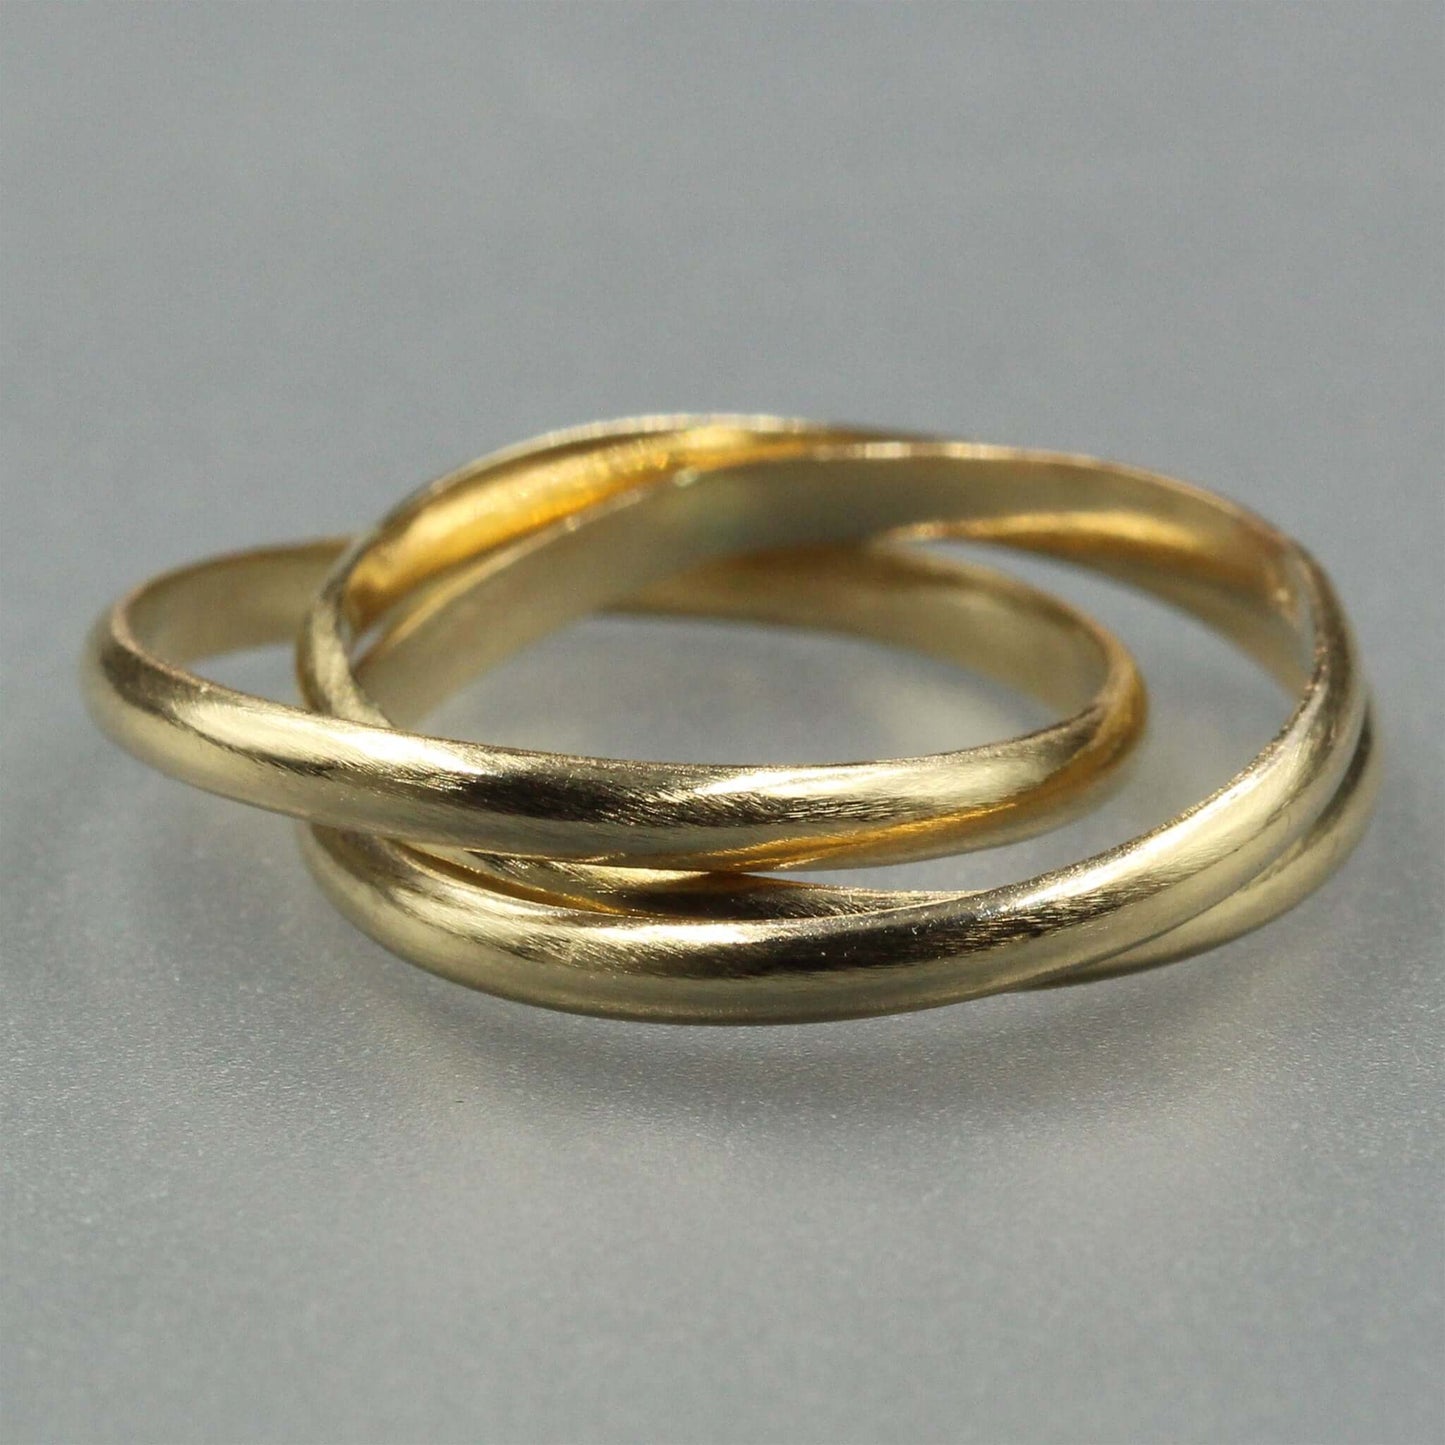 Gold Russian wedding ring in 14k yellow gold, handmade by Rebecca Cordingley